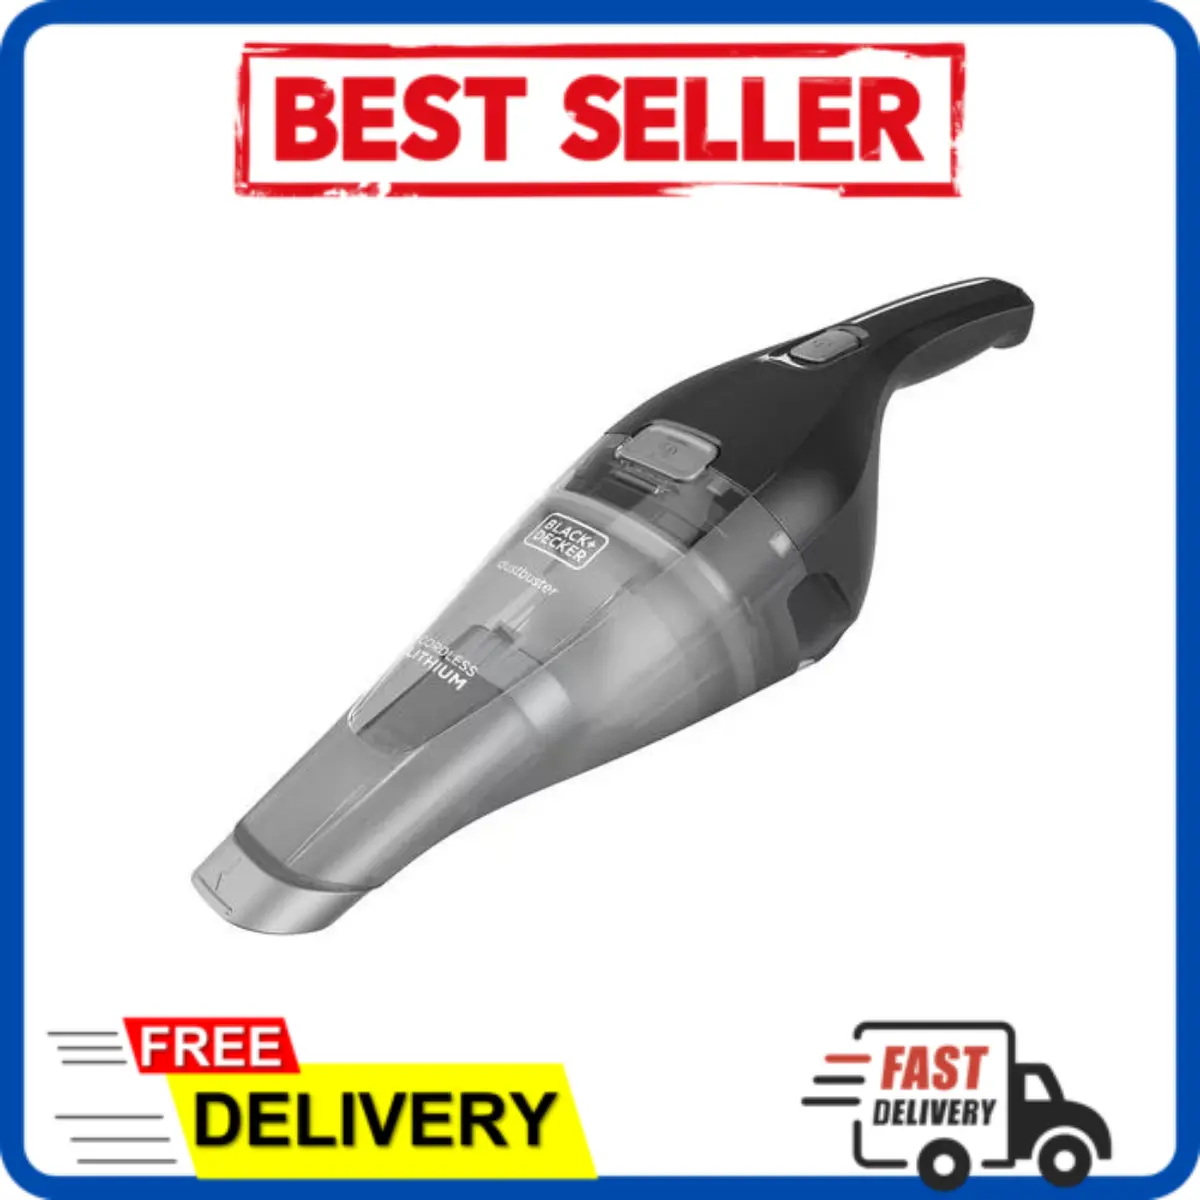 Black & Decker HNVC220BCZ00 Dustbuster Lithium Hand Vacuum